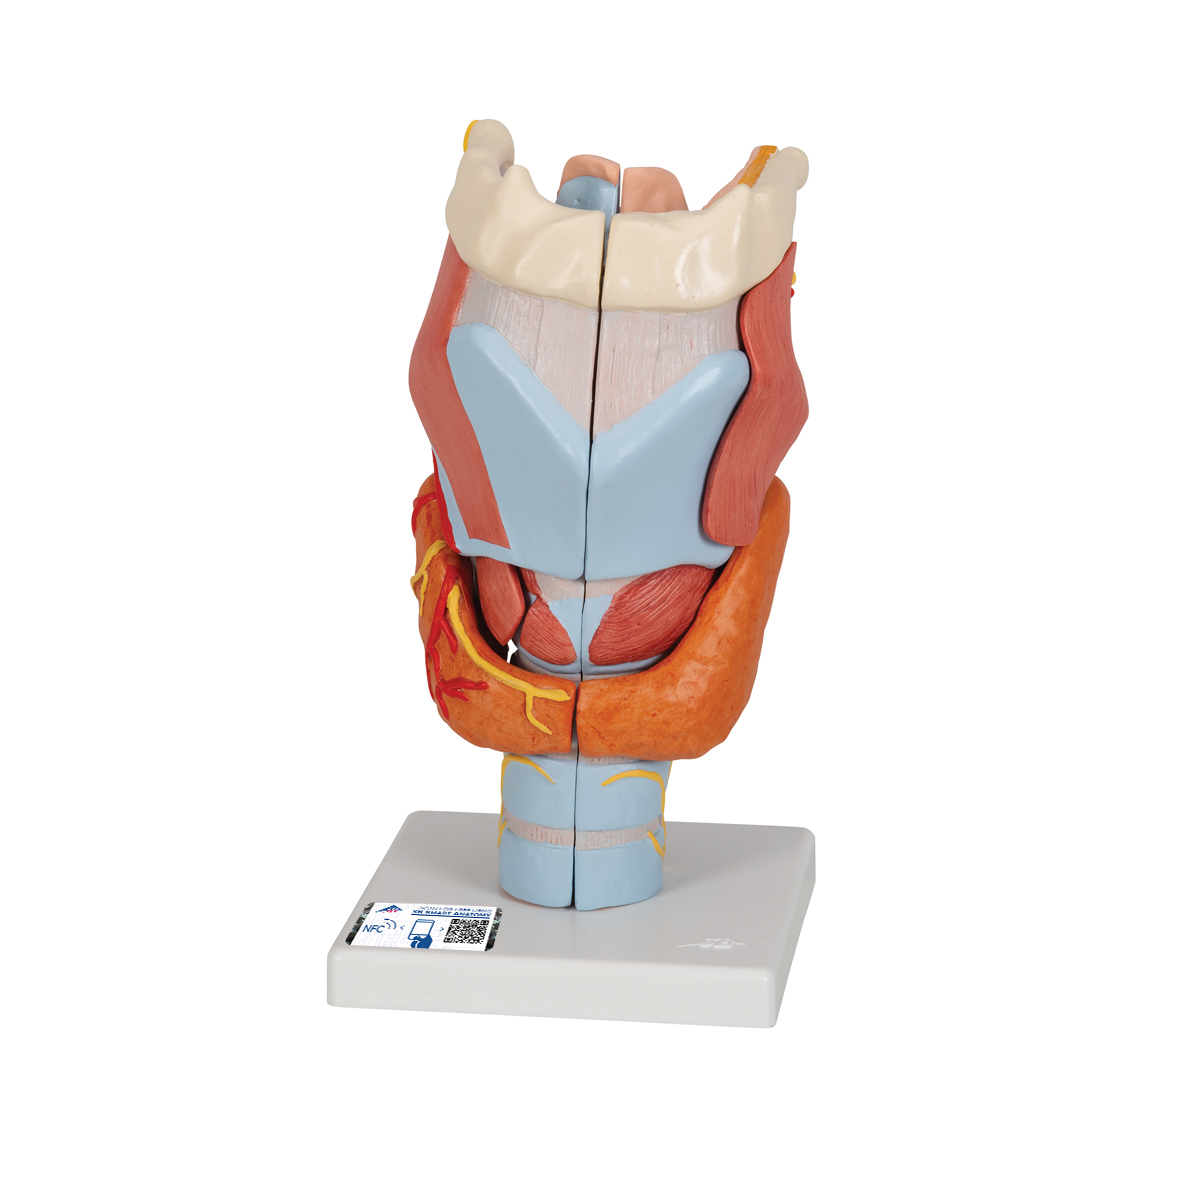 Human Larynx Model, 2 times Full-Size, 7 part - 3B Smart Anatomy - 1000272  - 3B Scientific - G21 - Ear Models, Larynx Models